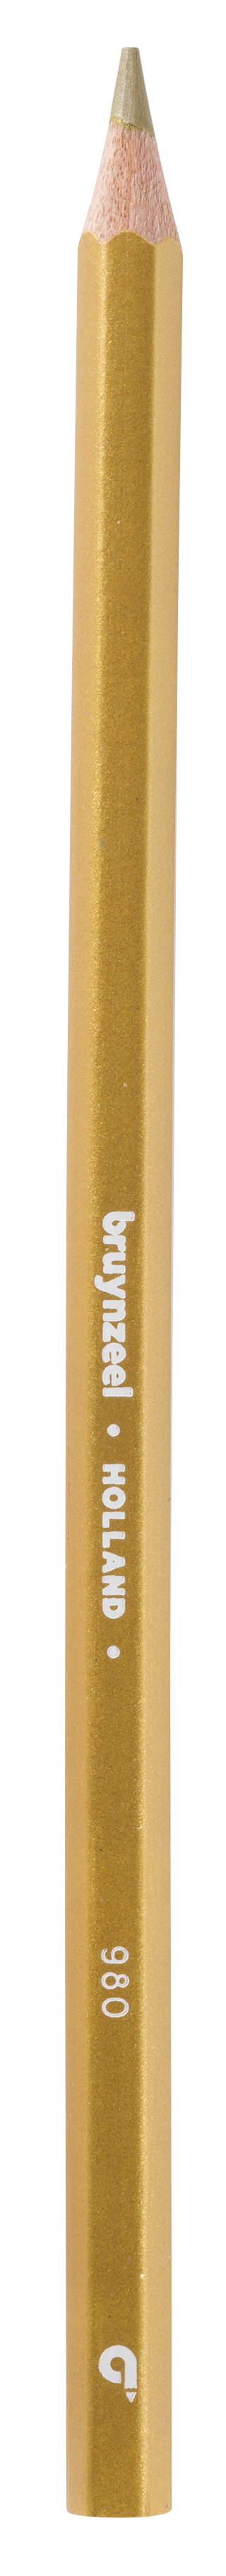 BRUYNZEEL Crayon de couleur Super 3.3mm 60516980 gold gold